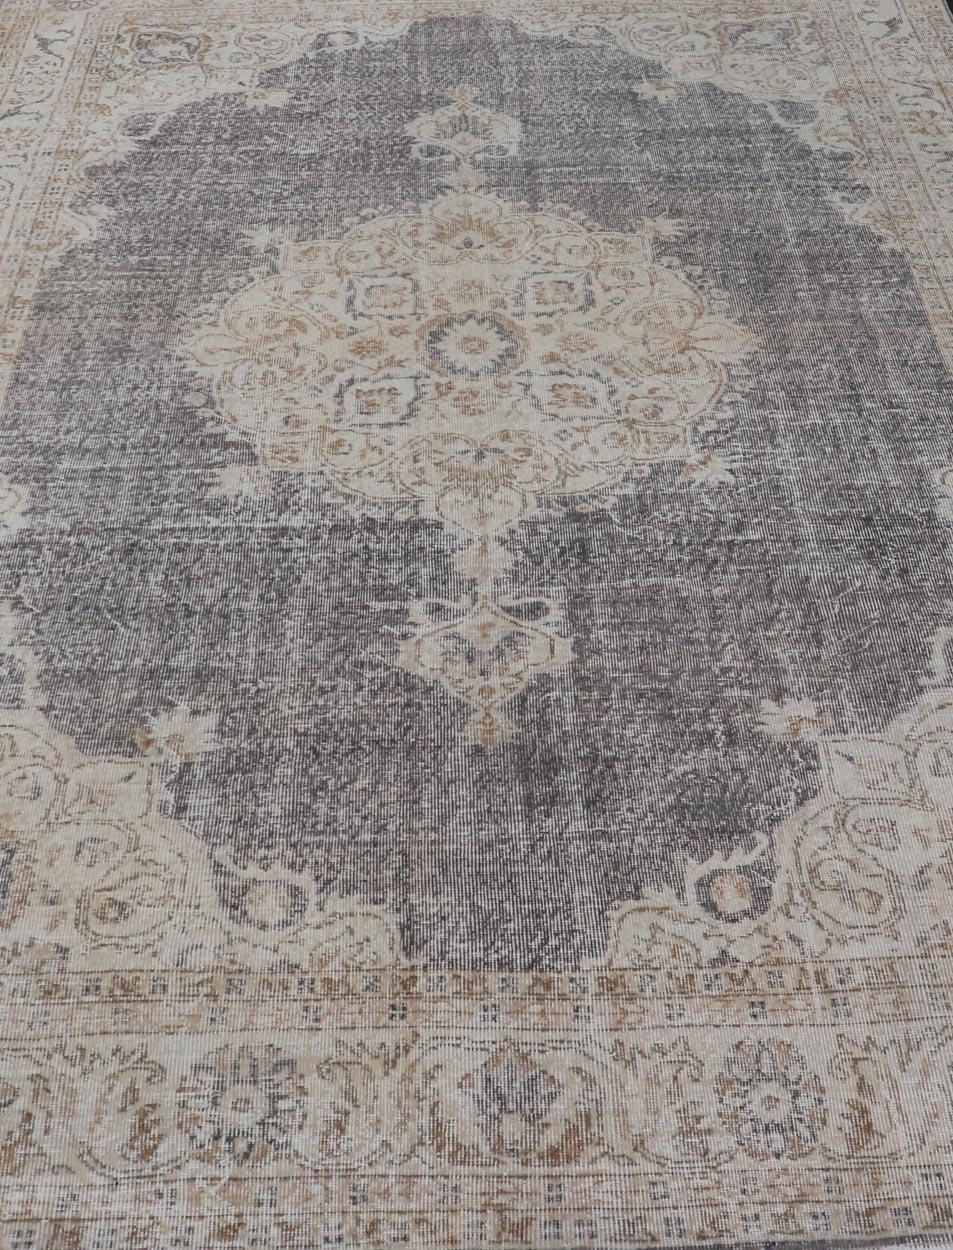 Distressed Turkish Carpet with medallion Design in Dark Gray, Lt. Brown & Cream For Sale 3